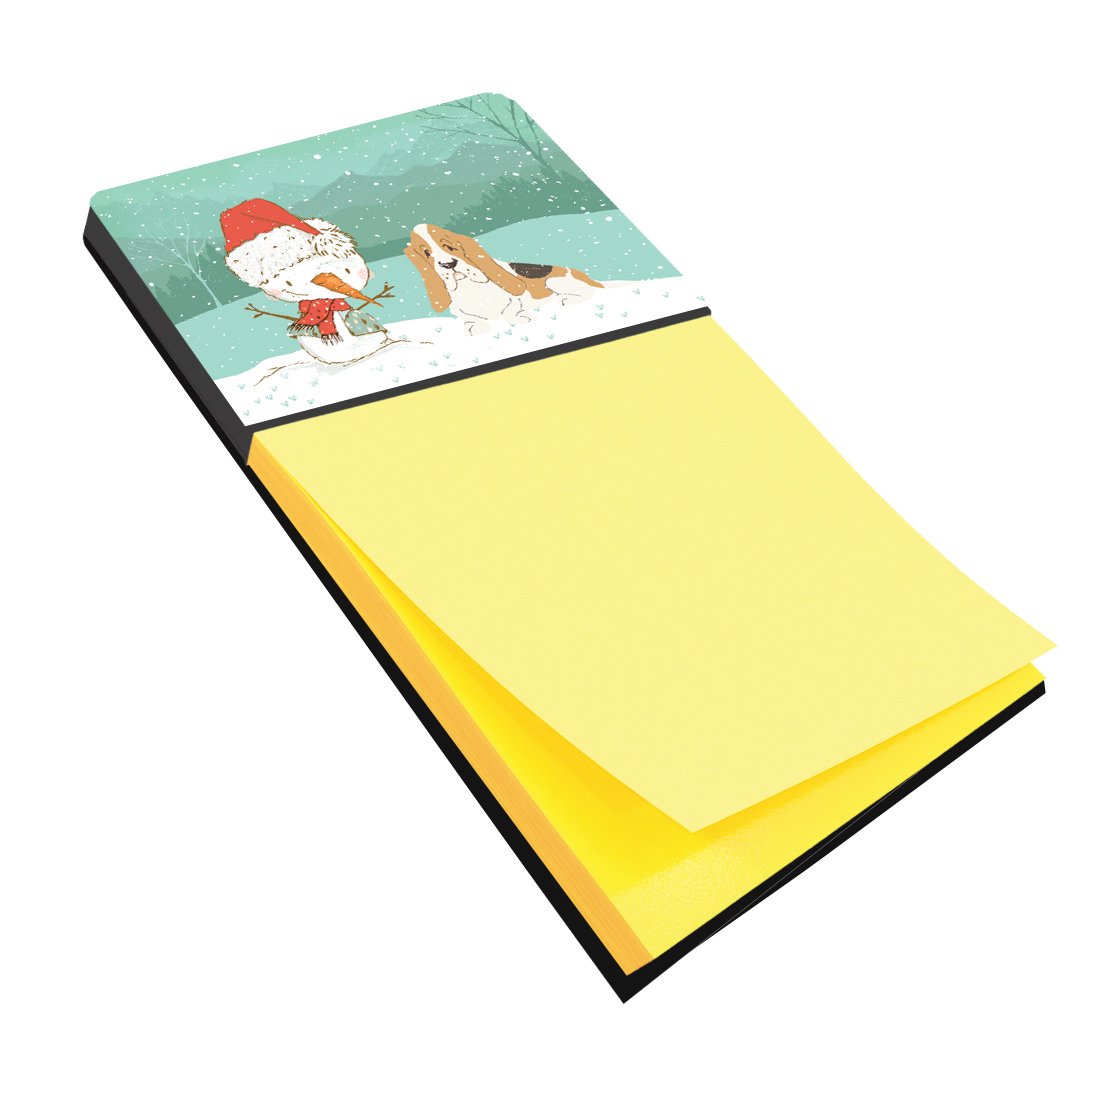 Basset Hound Snowman Christmas Sticky Note Holder CK2051SN by Caroline's Treasures